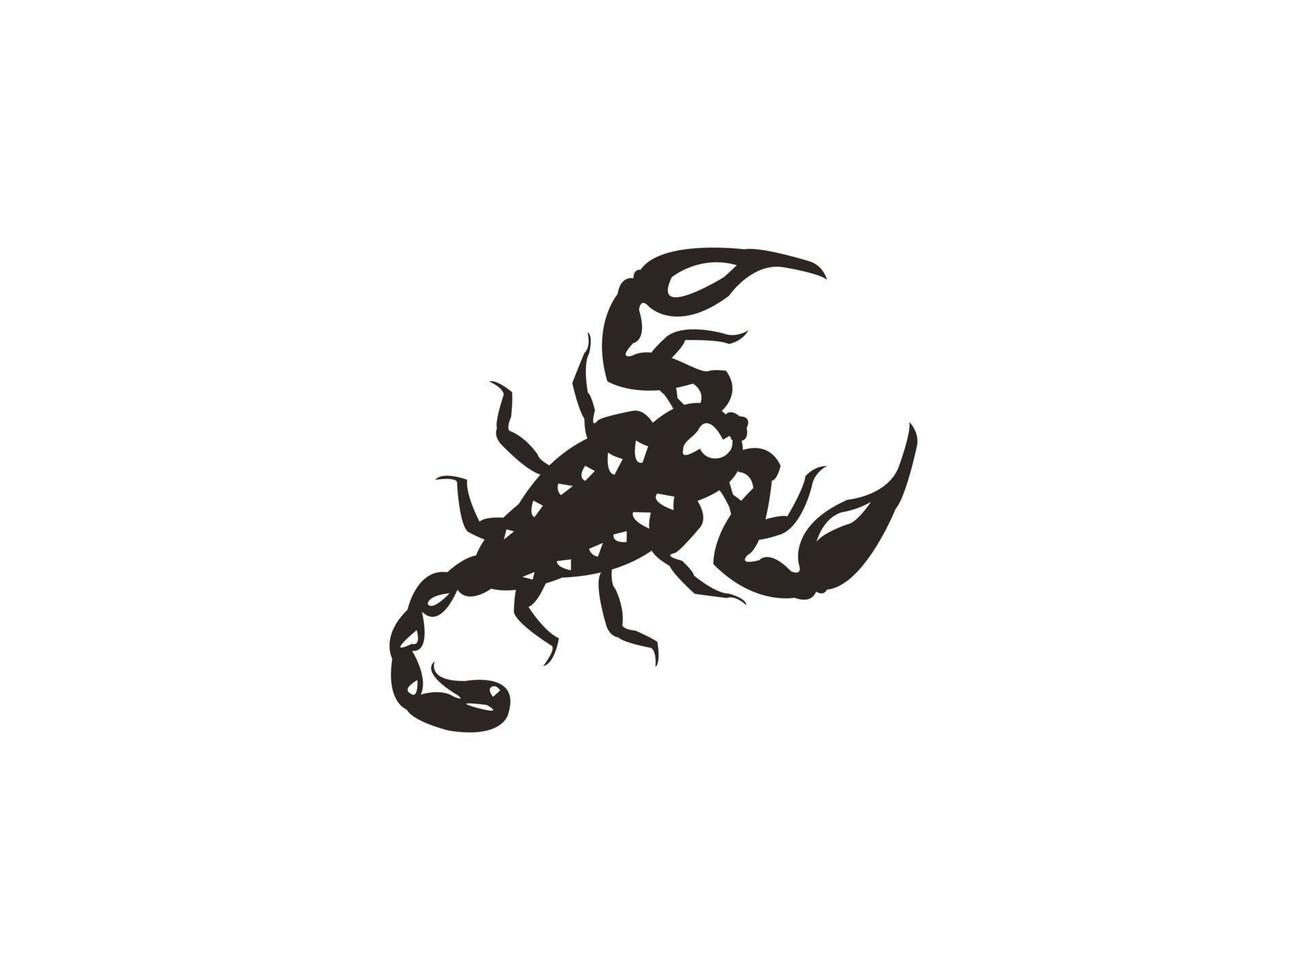 Scorpion illustration on isolated background vector